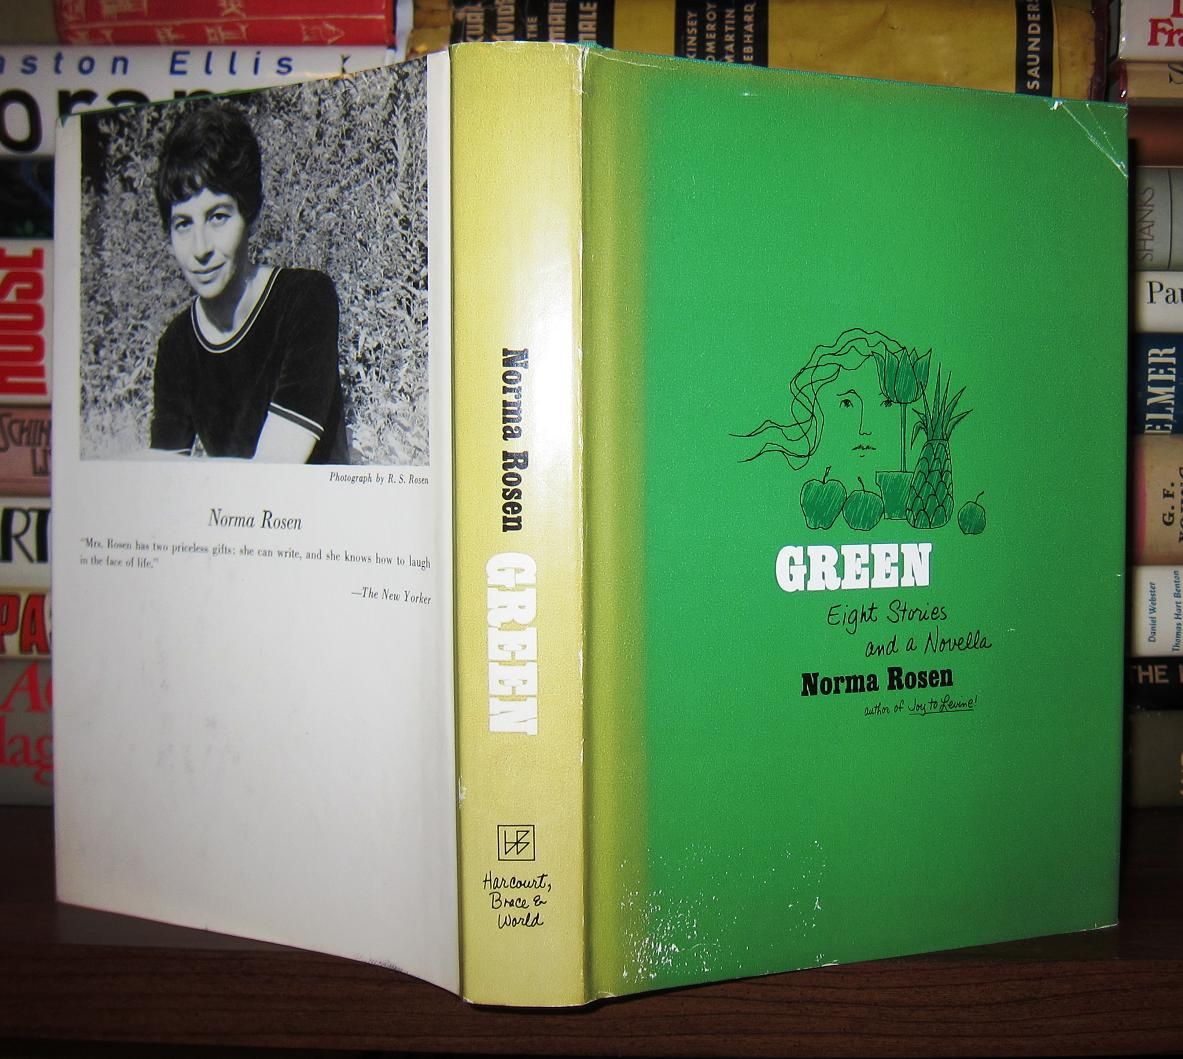 ROSEN, NORMA - Green Eight Stories and a Novella